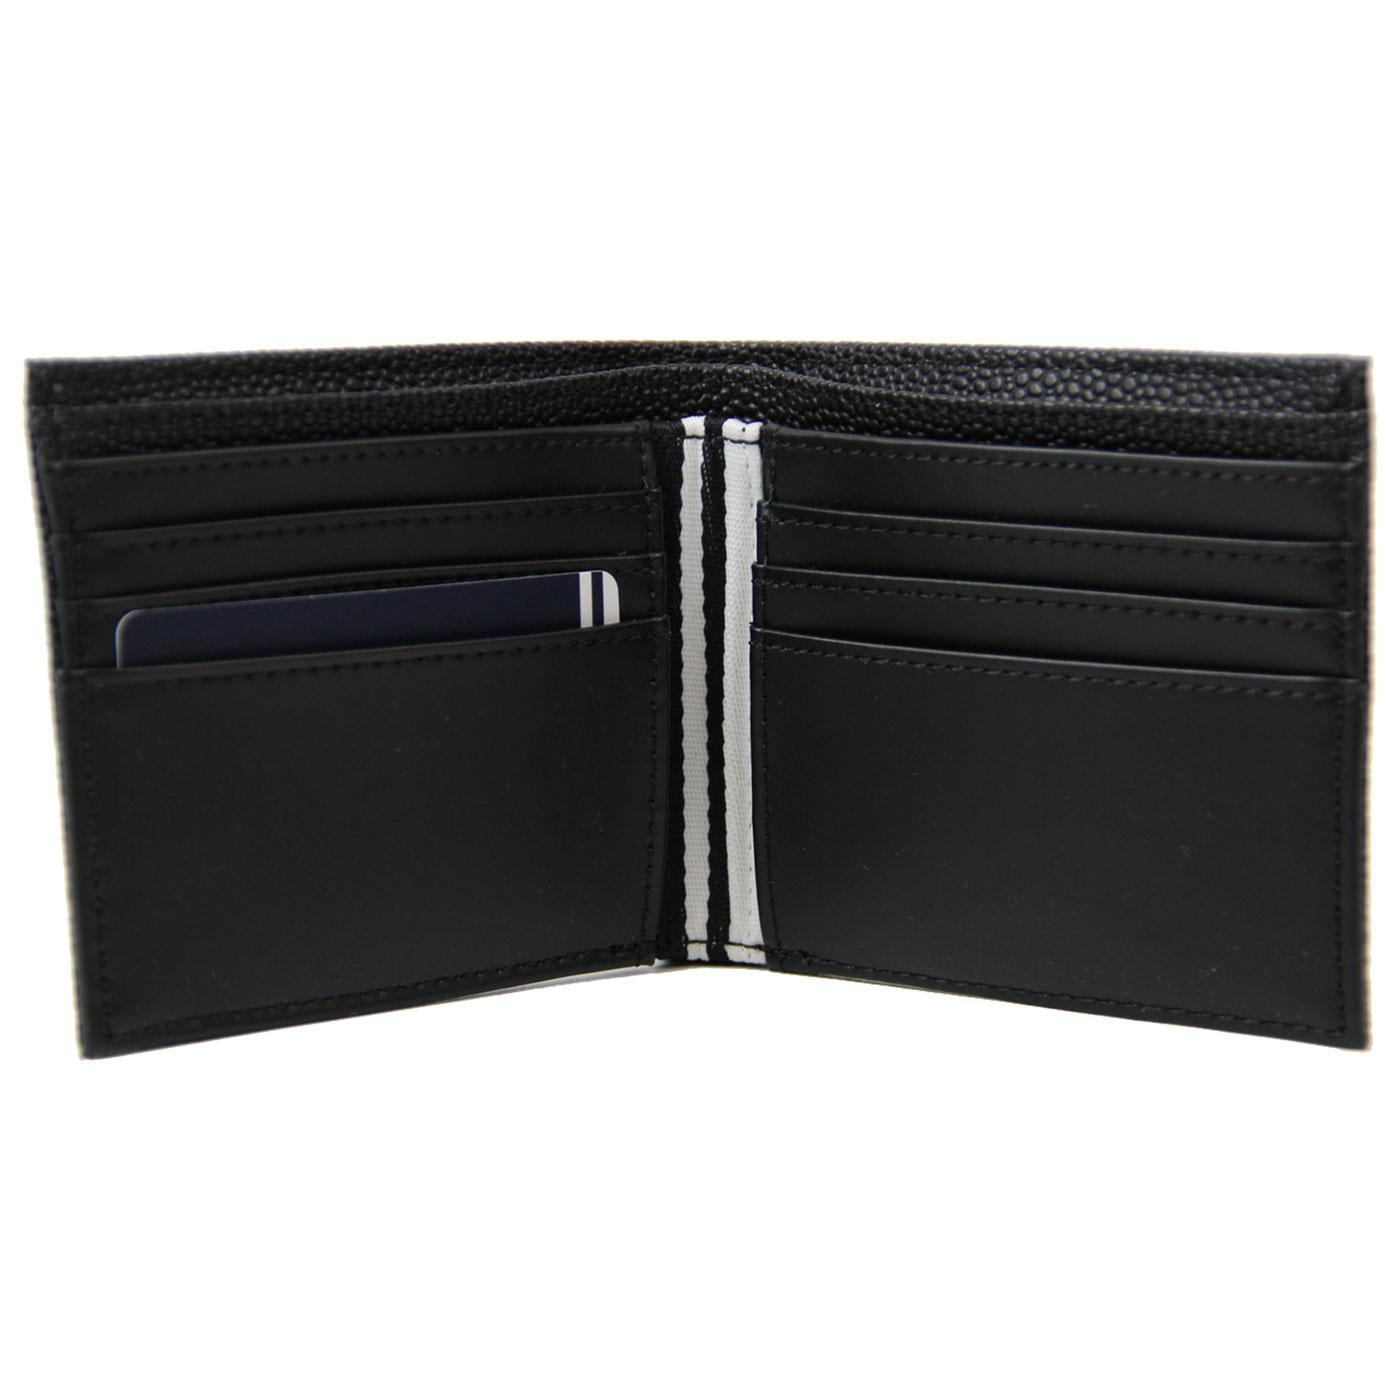 FRED PERRY Scotch Grain Leather Bi-Fold Wallet in Black